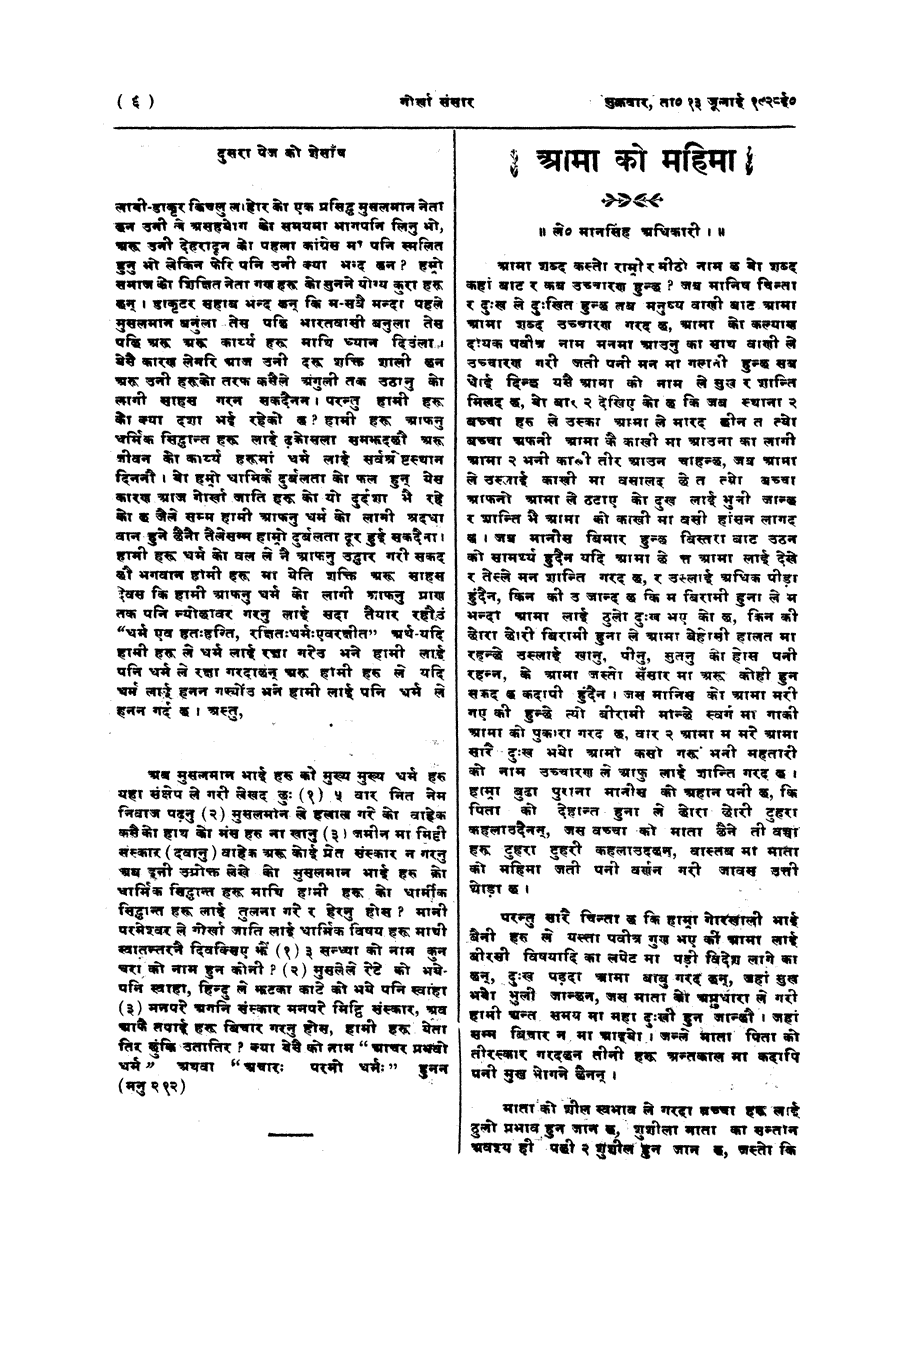 Gorkha Sansar, 13 July 1928, page 6